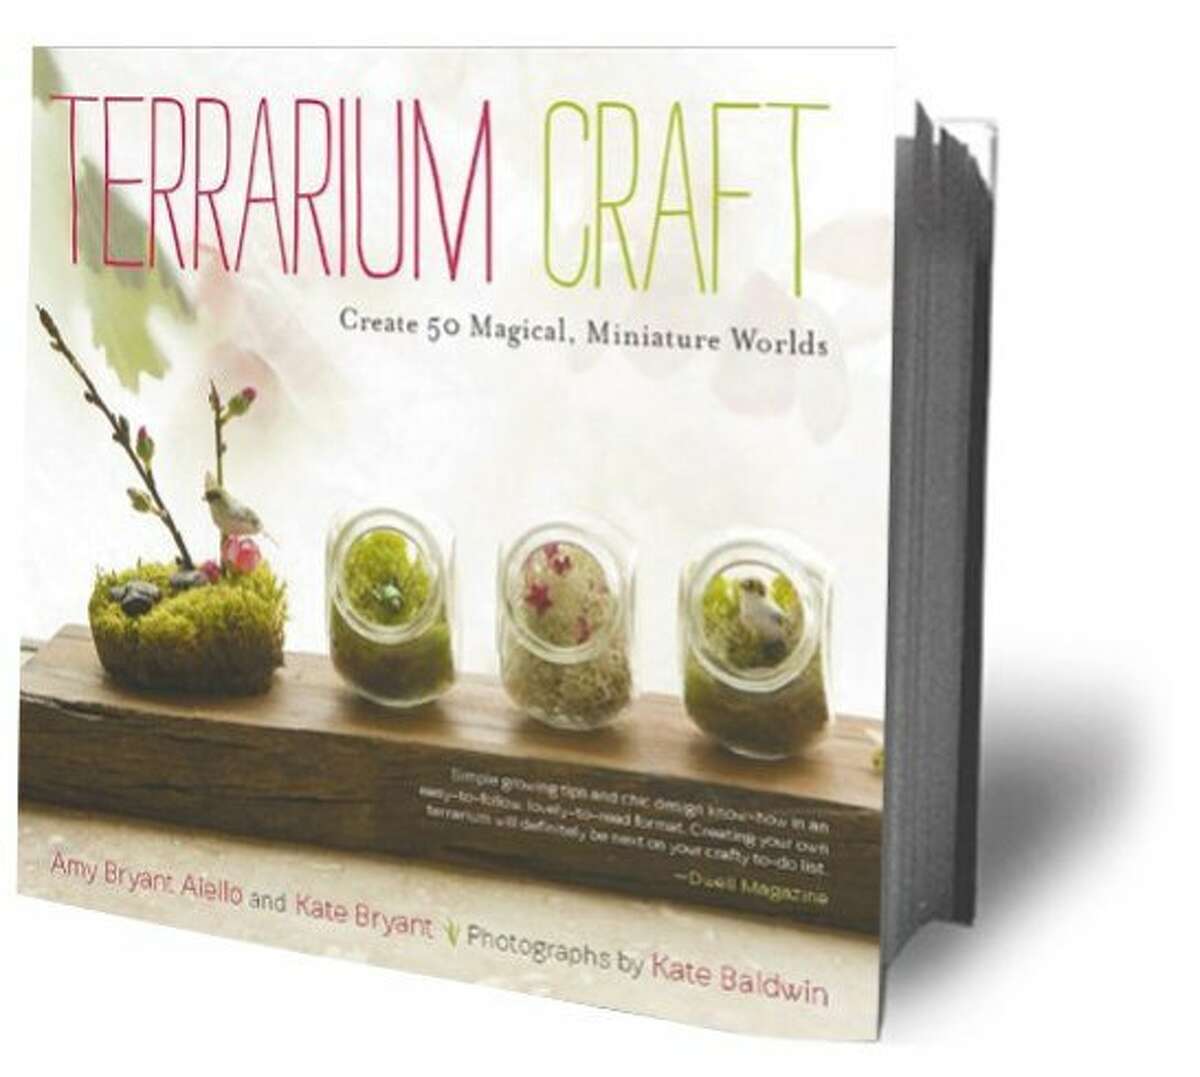 "Terrarium Craft: Create 50 Magical, Miniature Worlds" by Amy Bryant